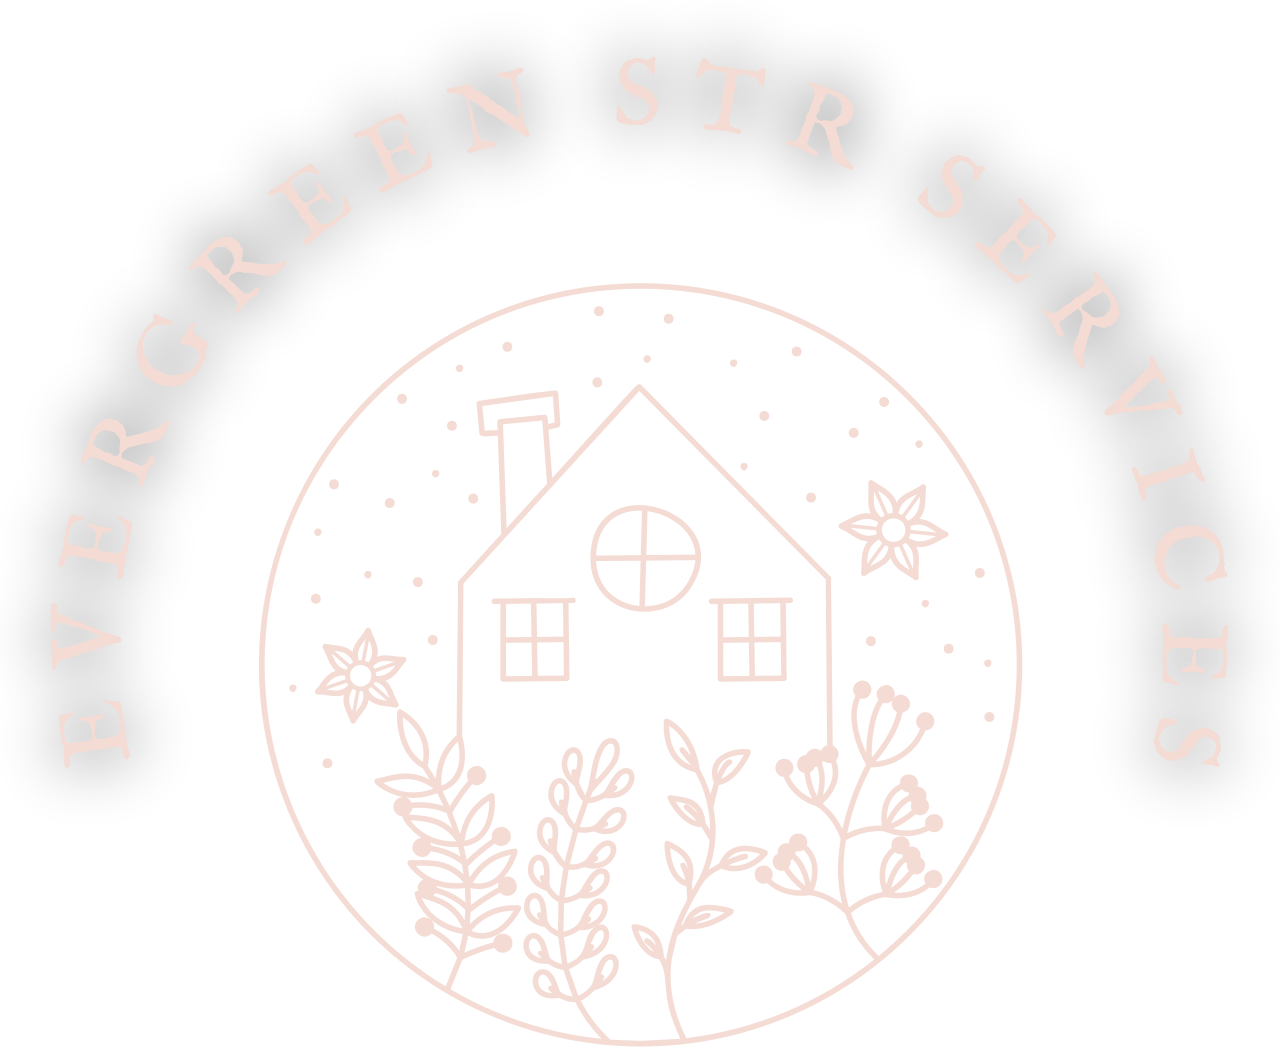 EVERGREEN STR SERVICES's logo